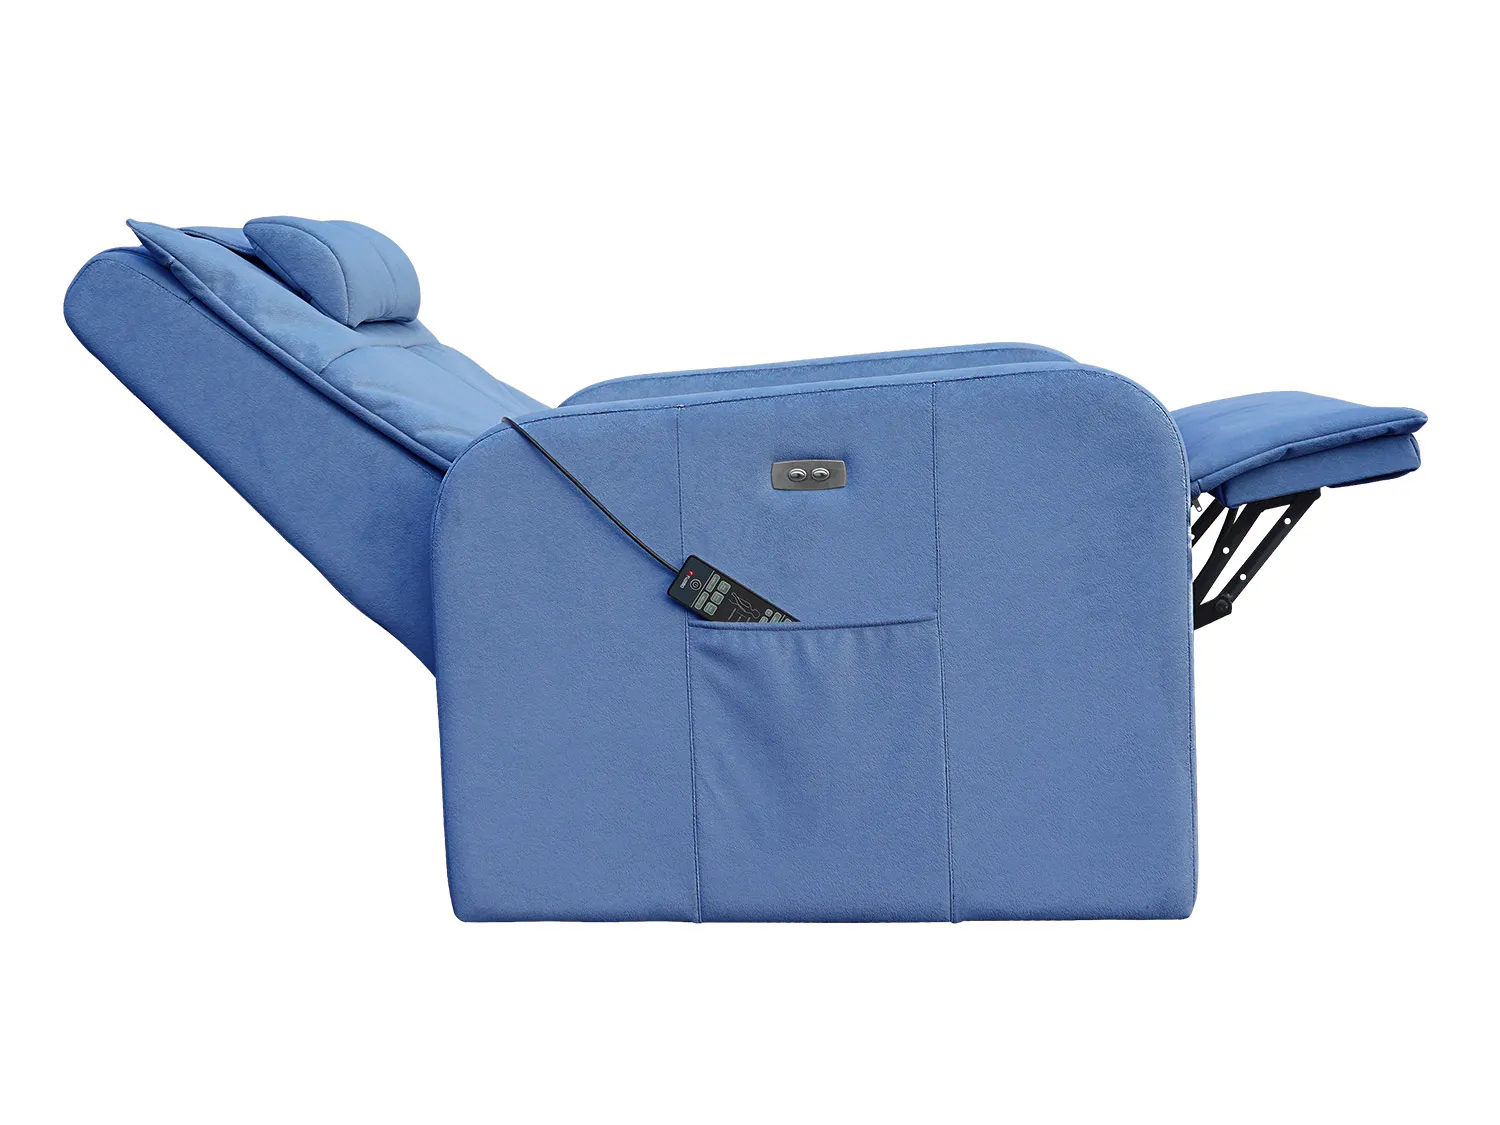 Массажное кресло реклайнер с подъемом FUJIMO LIFT CHAIR F3005 FLFK цвет на заказ - 7 